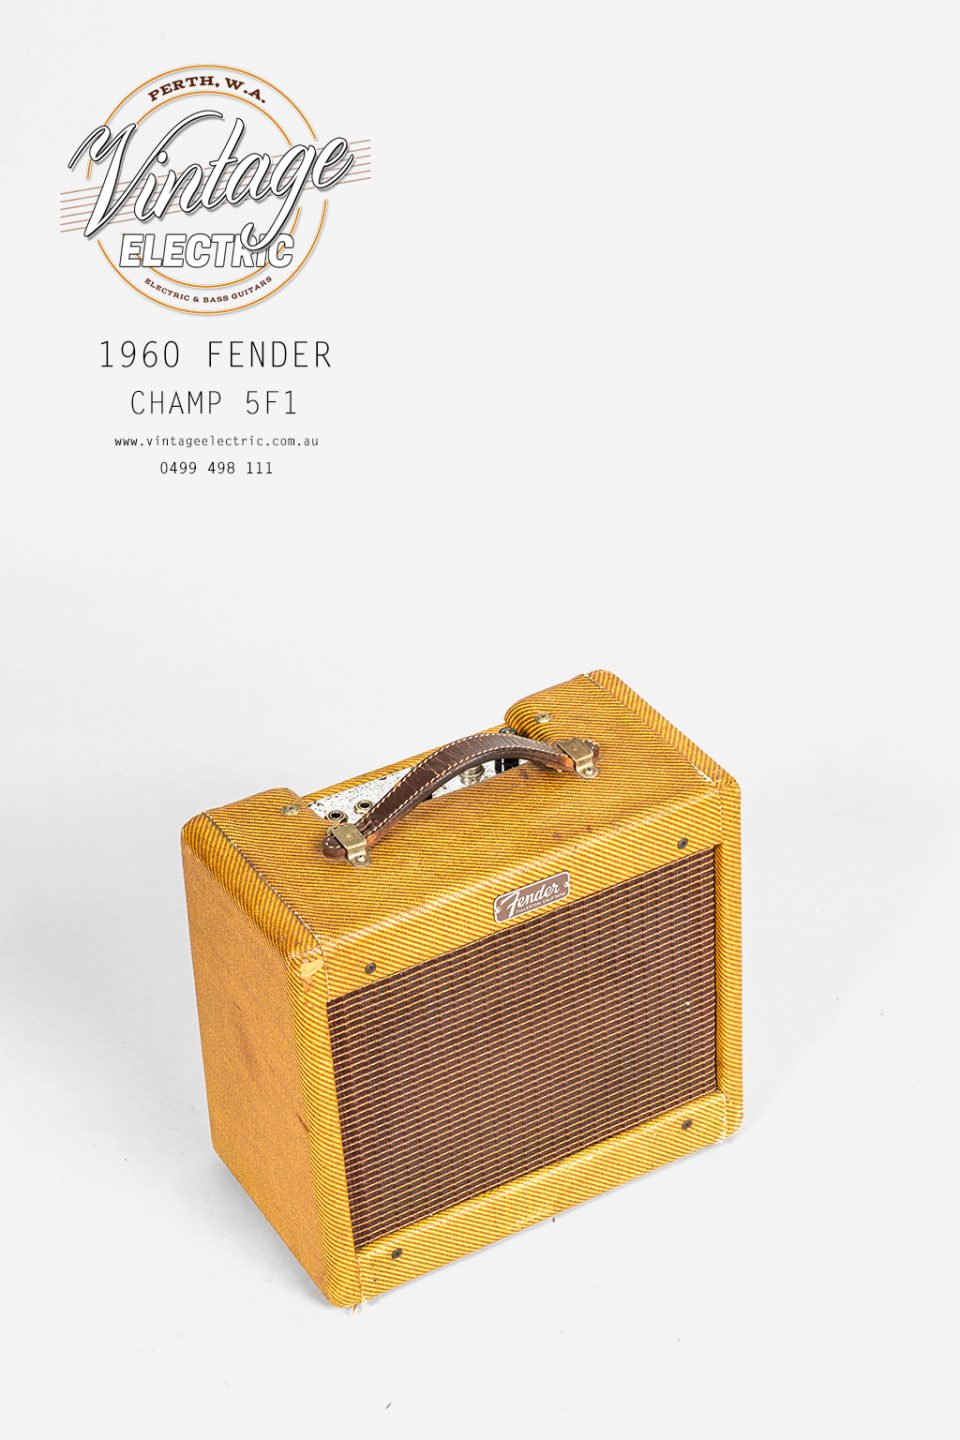 1960 Fender Champ 5F1 A Top